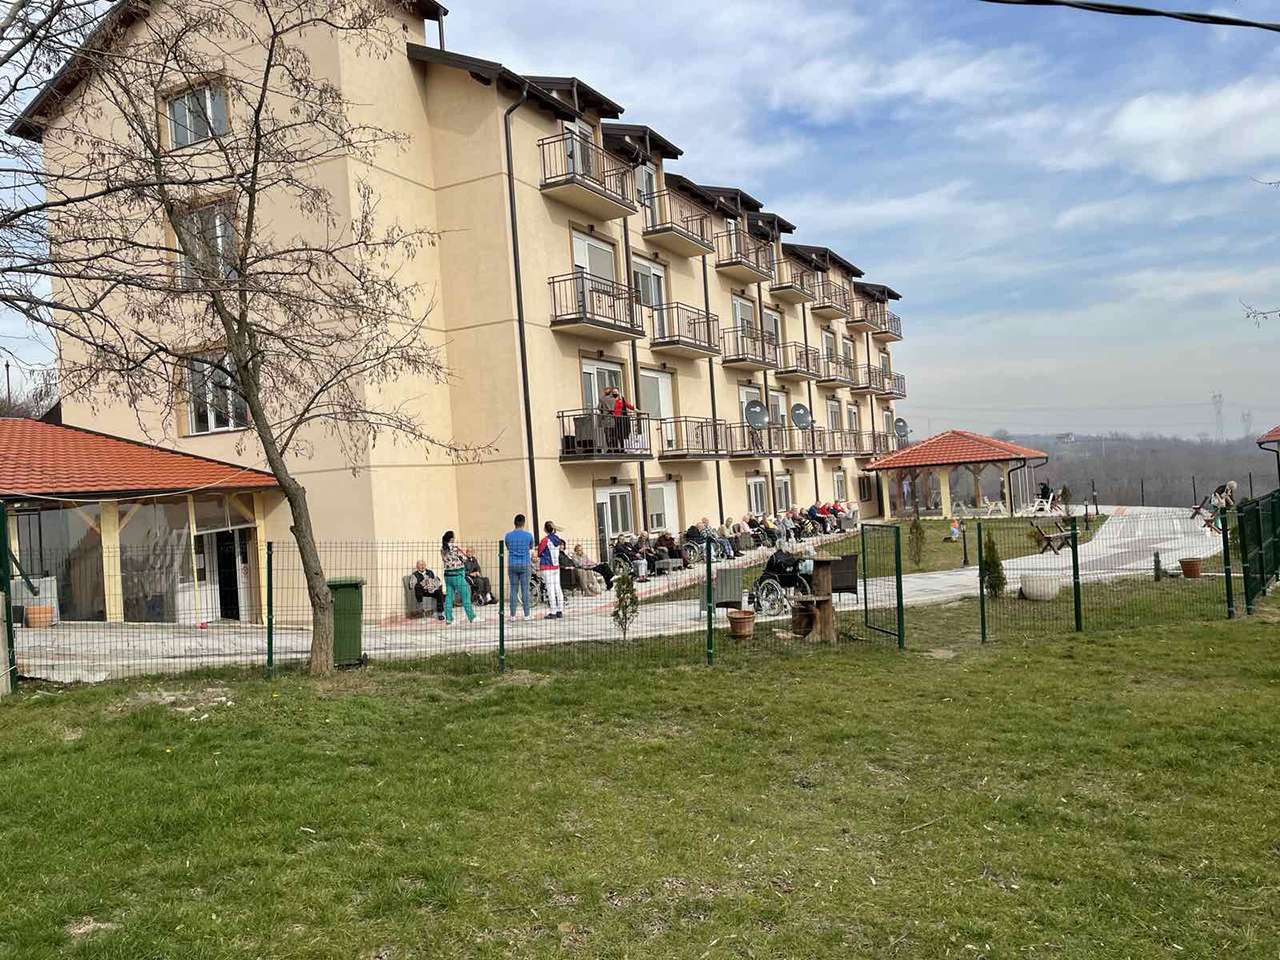 Slika 1 - DOM ZA STARE - HOTEL JAKOVLJEVIĆ Domovi za stare, nega starih lica Beograd